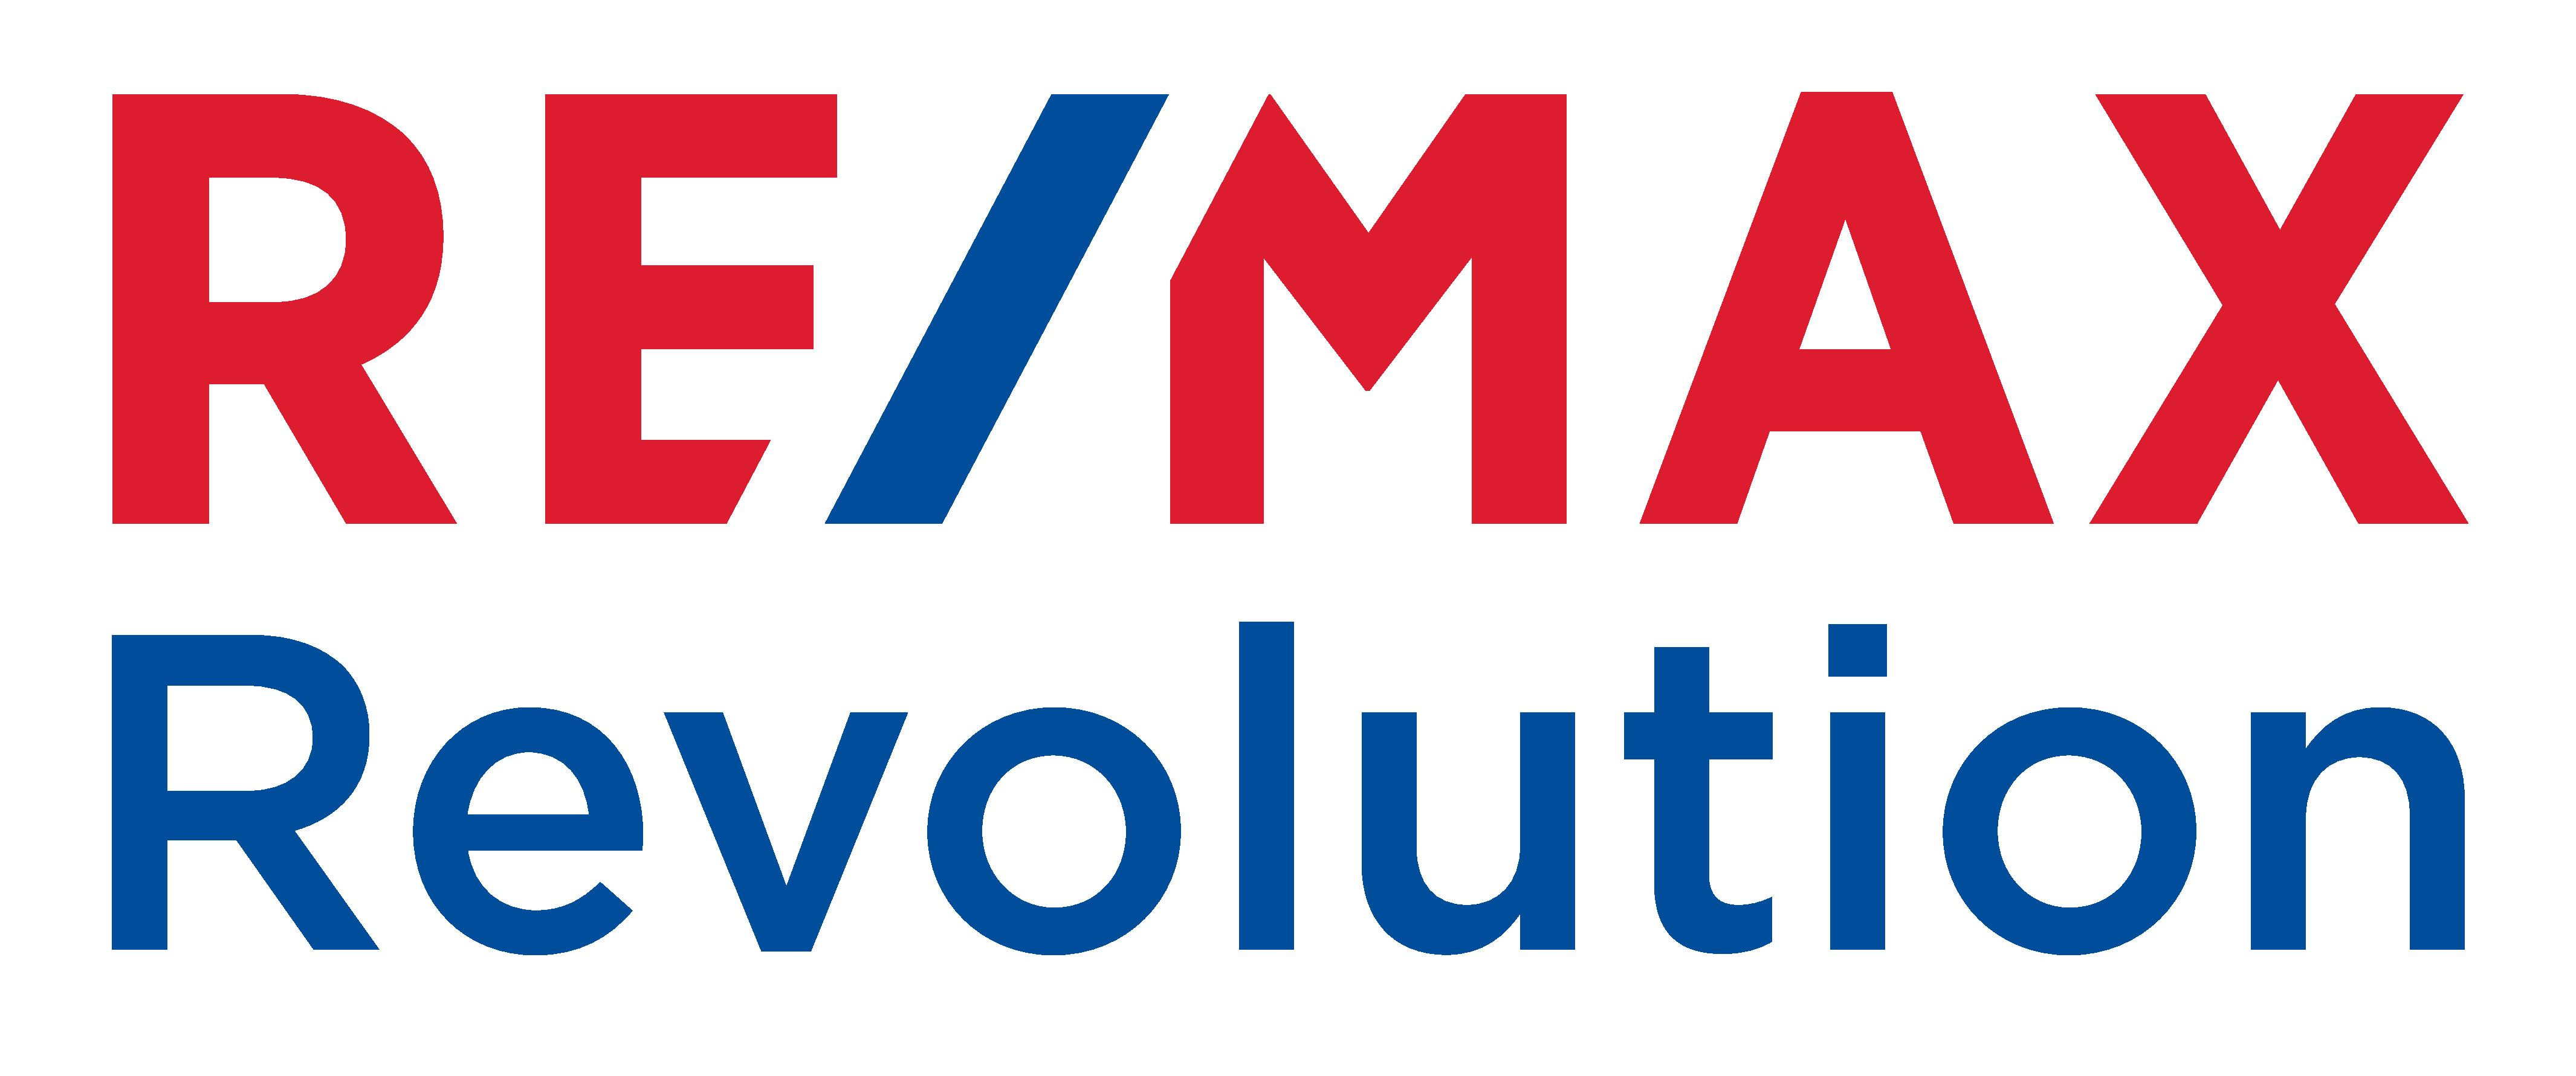 REMAX Revolution Logotype CMYK P page 001